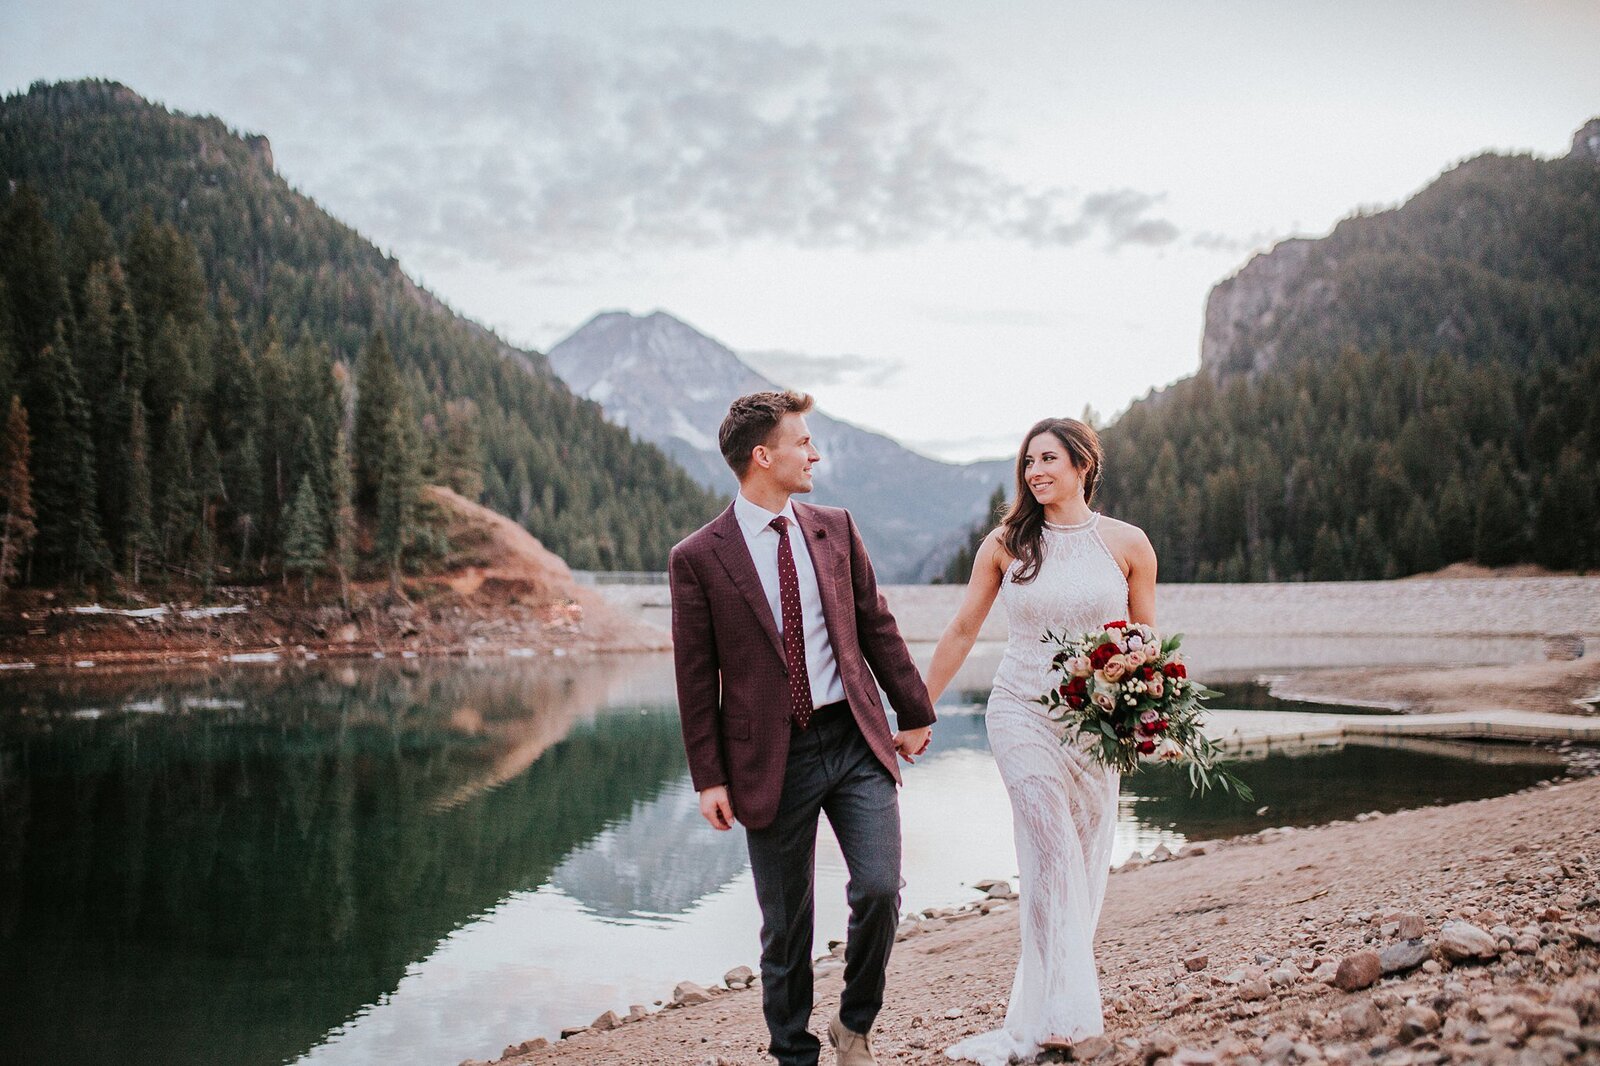 Lake Tahoe wedding photographer captures couple walking lakeside during bridal portraits after Lake Tahoe wedding